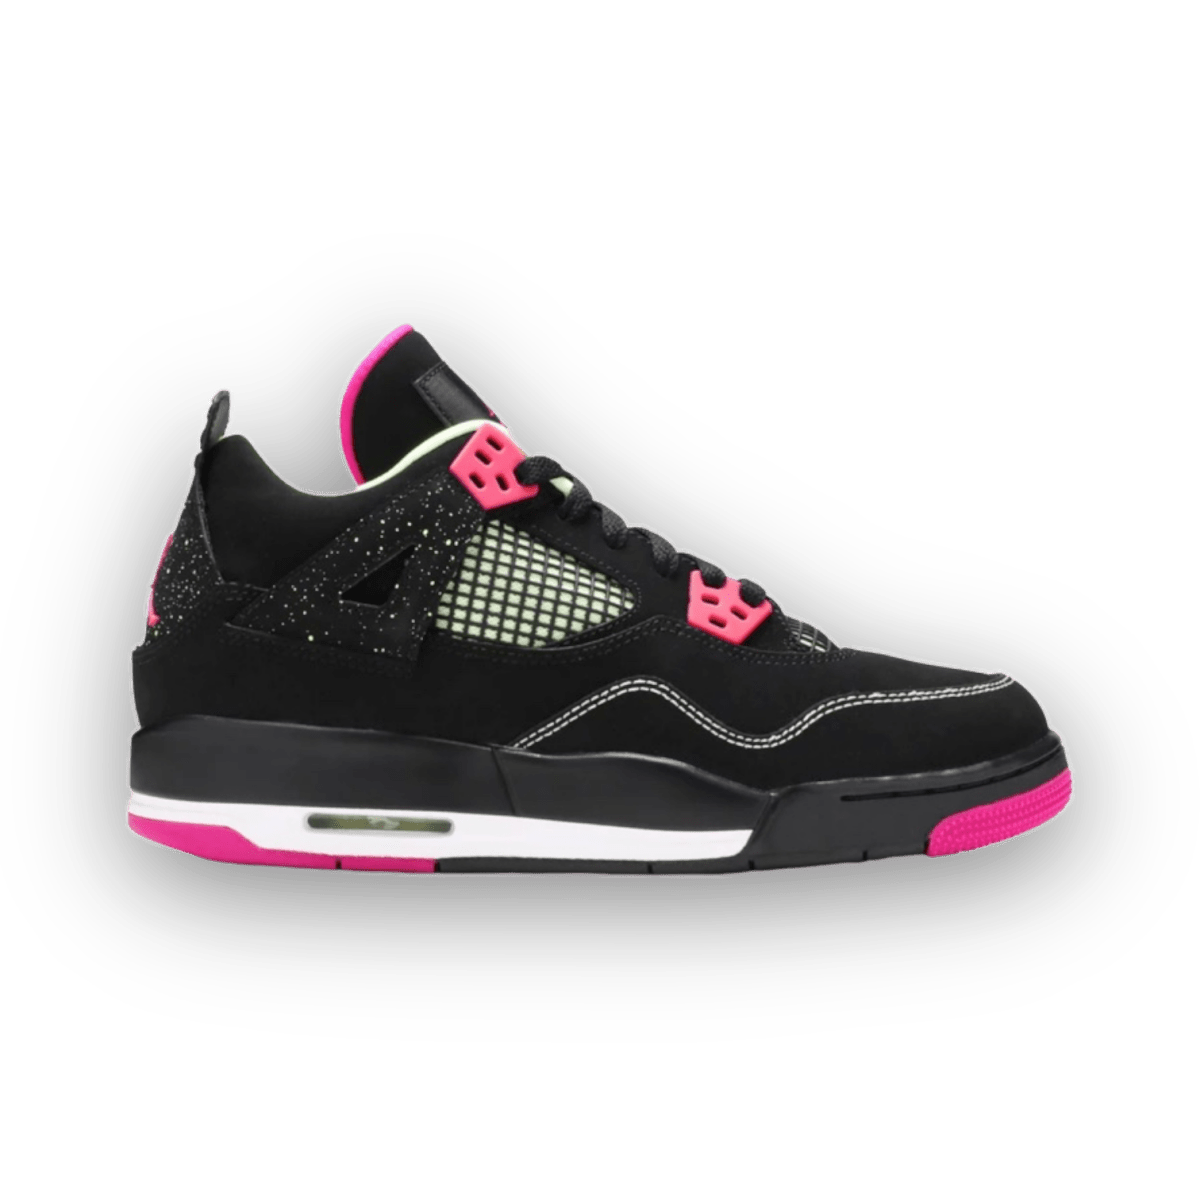 Air Jordan 4 Retro 'Fuchsia' - Grade School - Mid Sneaker - Jordan - Jawns on Fire - sneakers